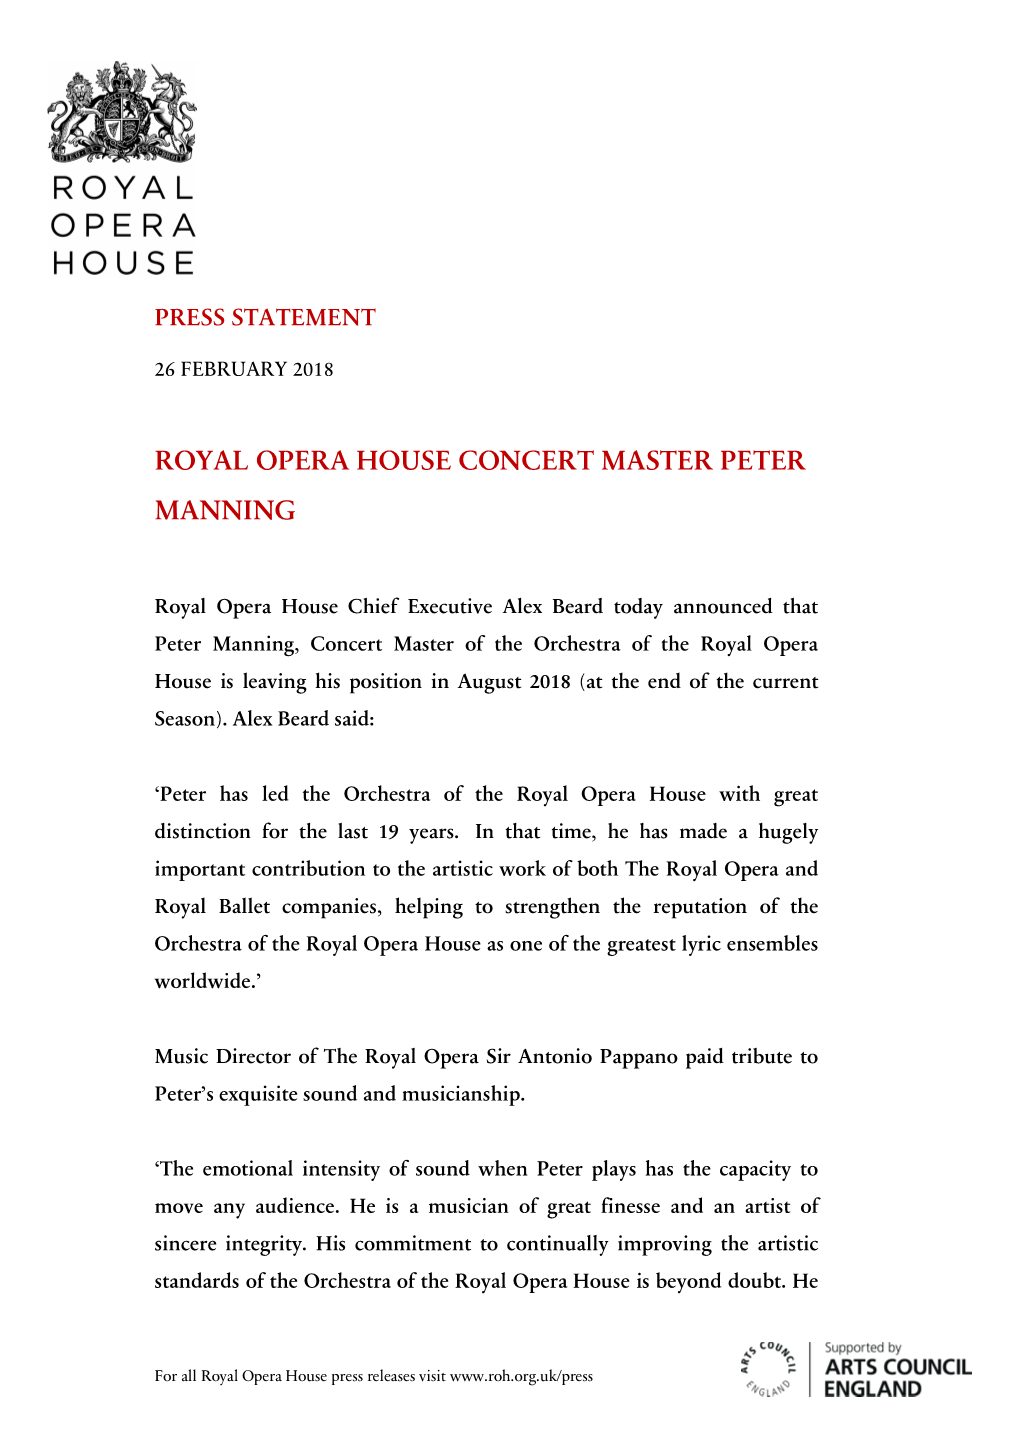 Royal Opera House Concert Master Peter Manning